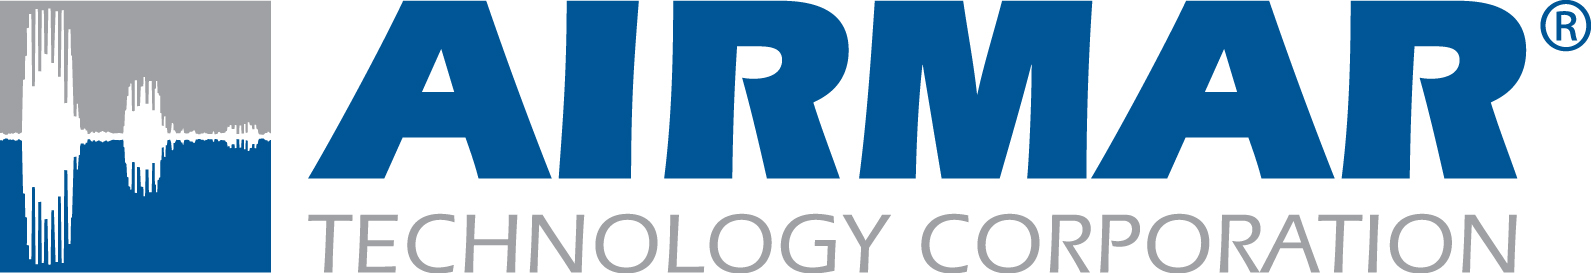 Airmar technology Corporation logo.